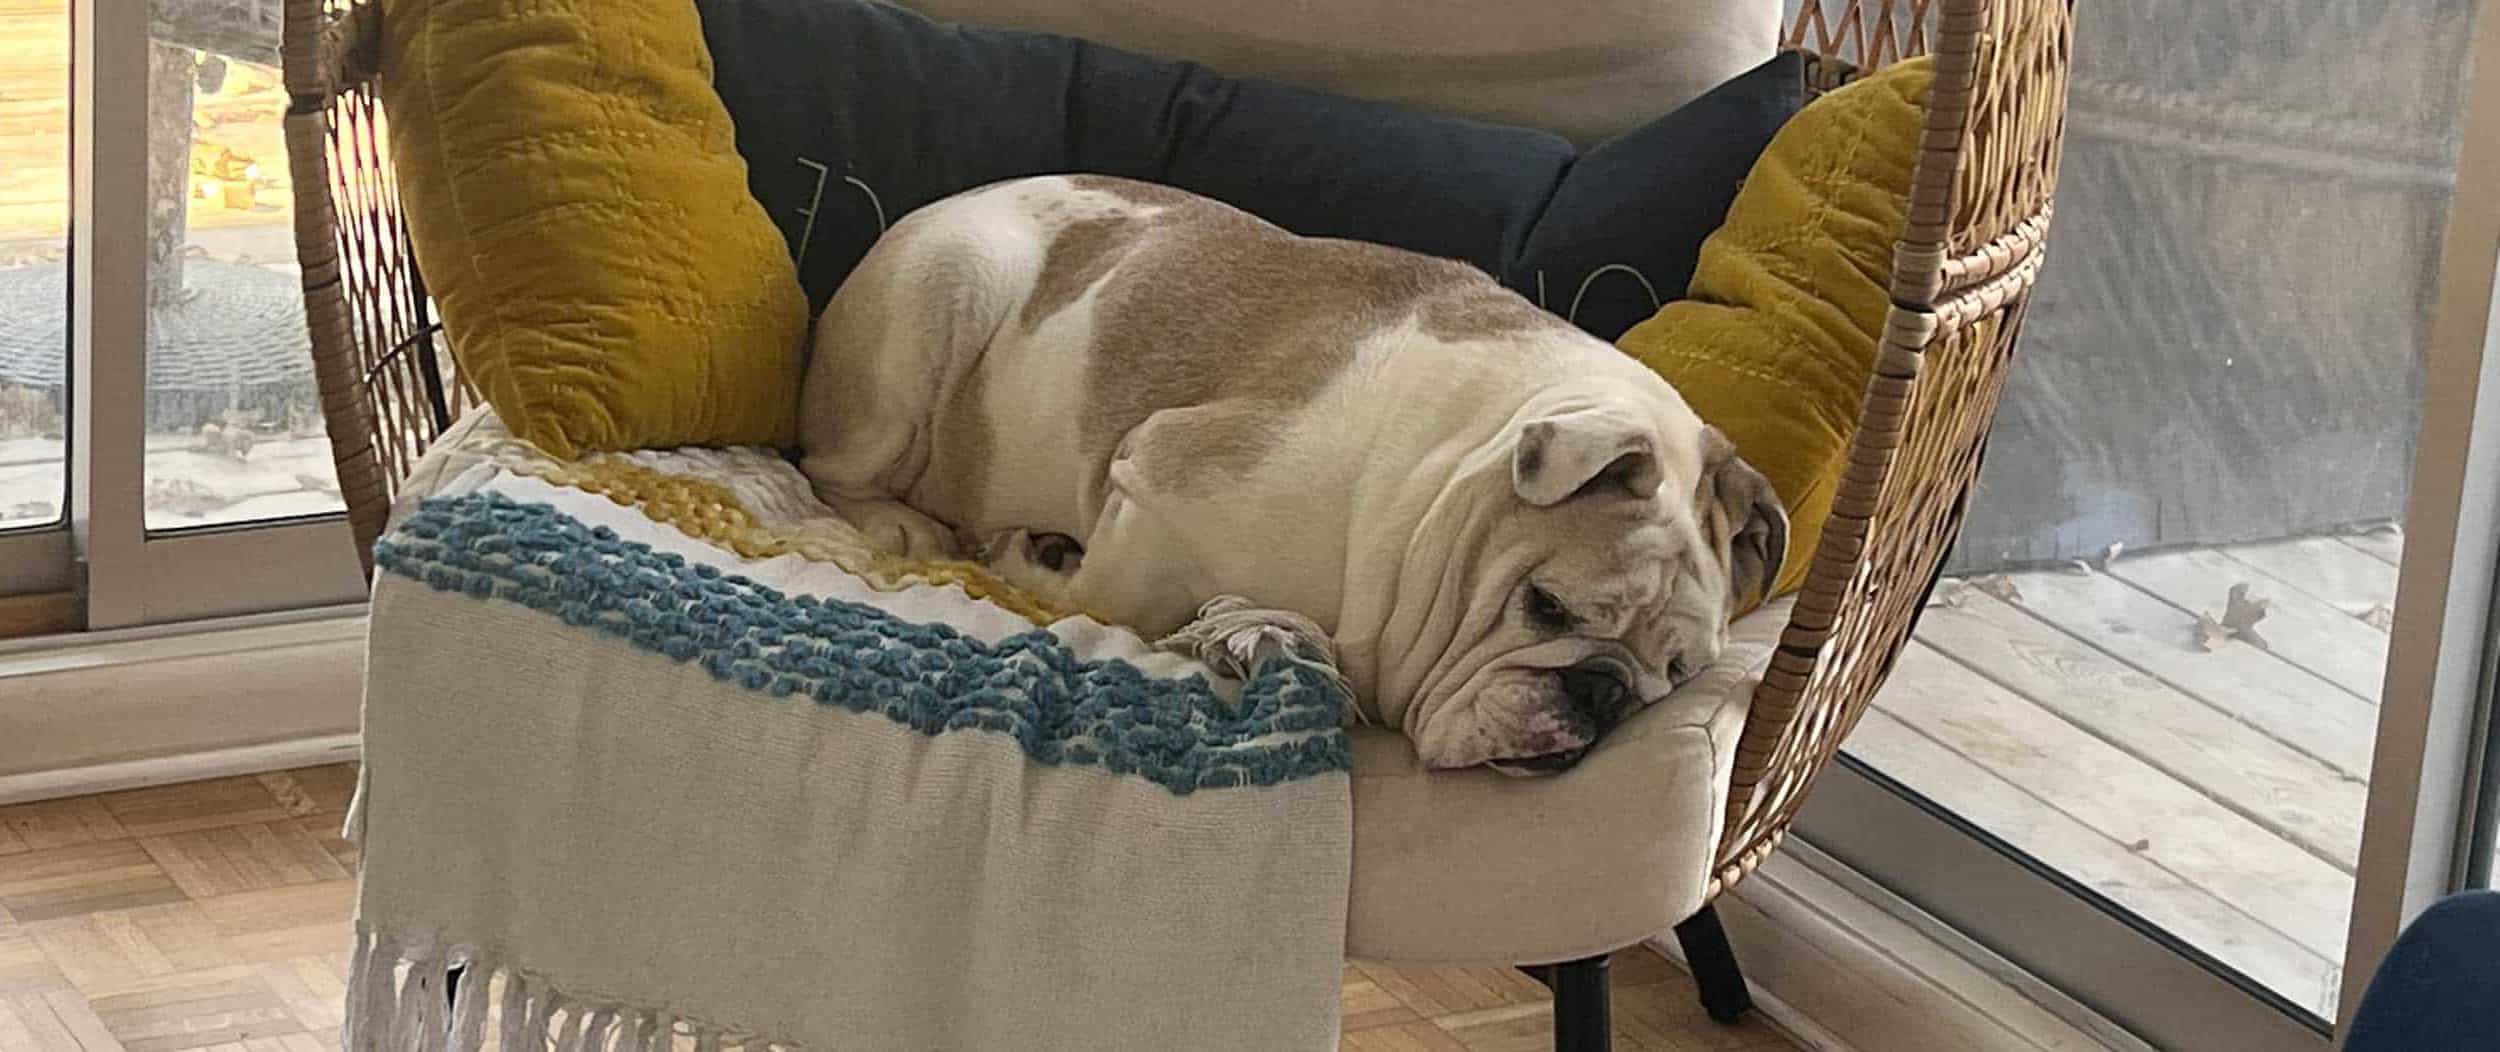 An older dog sleeping on a chair